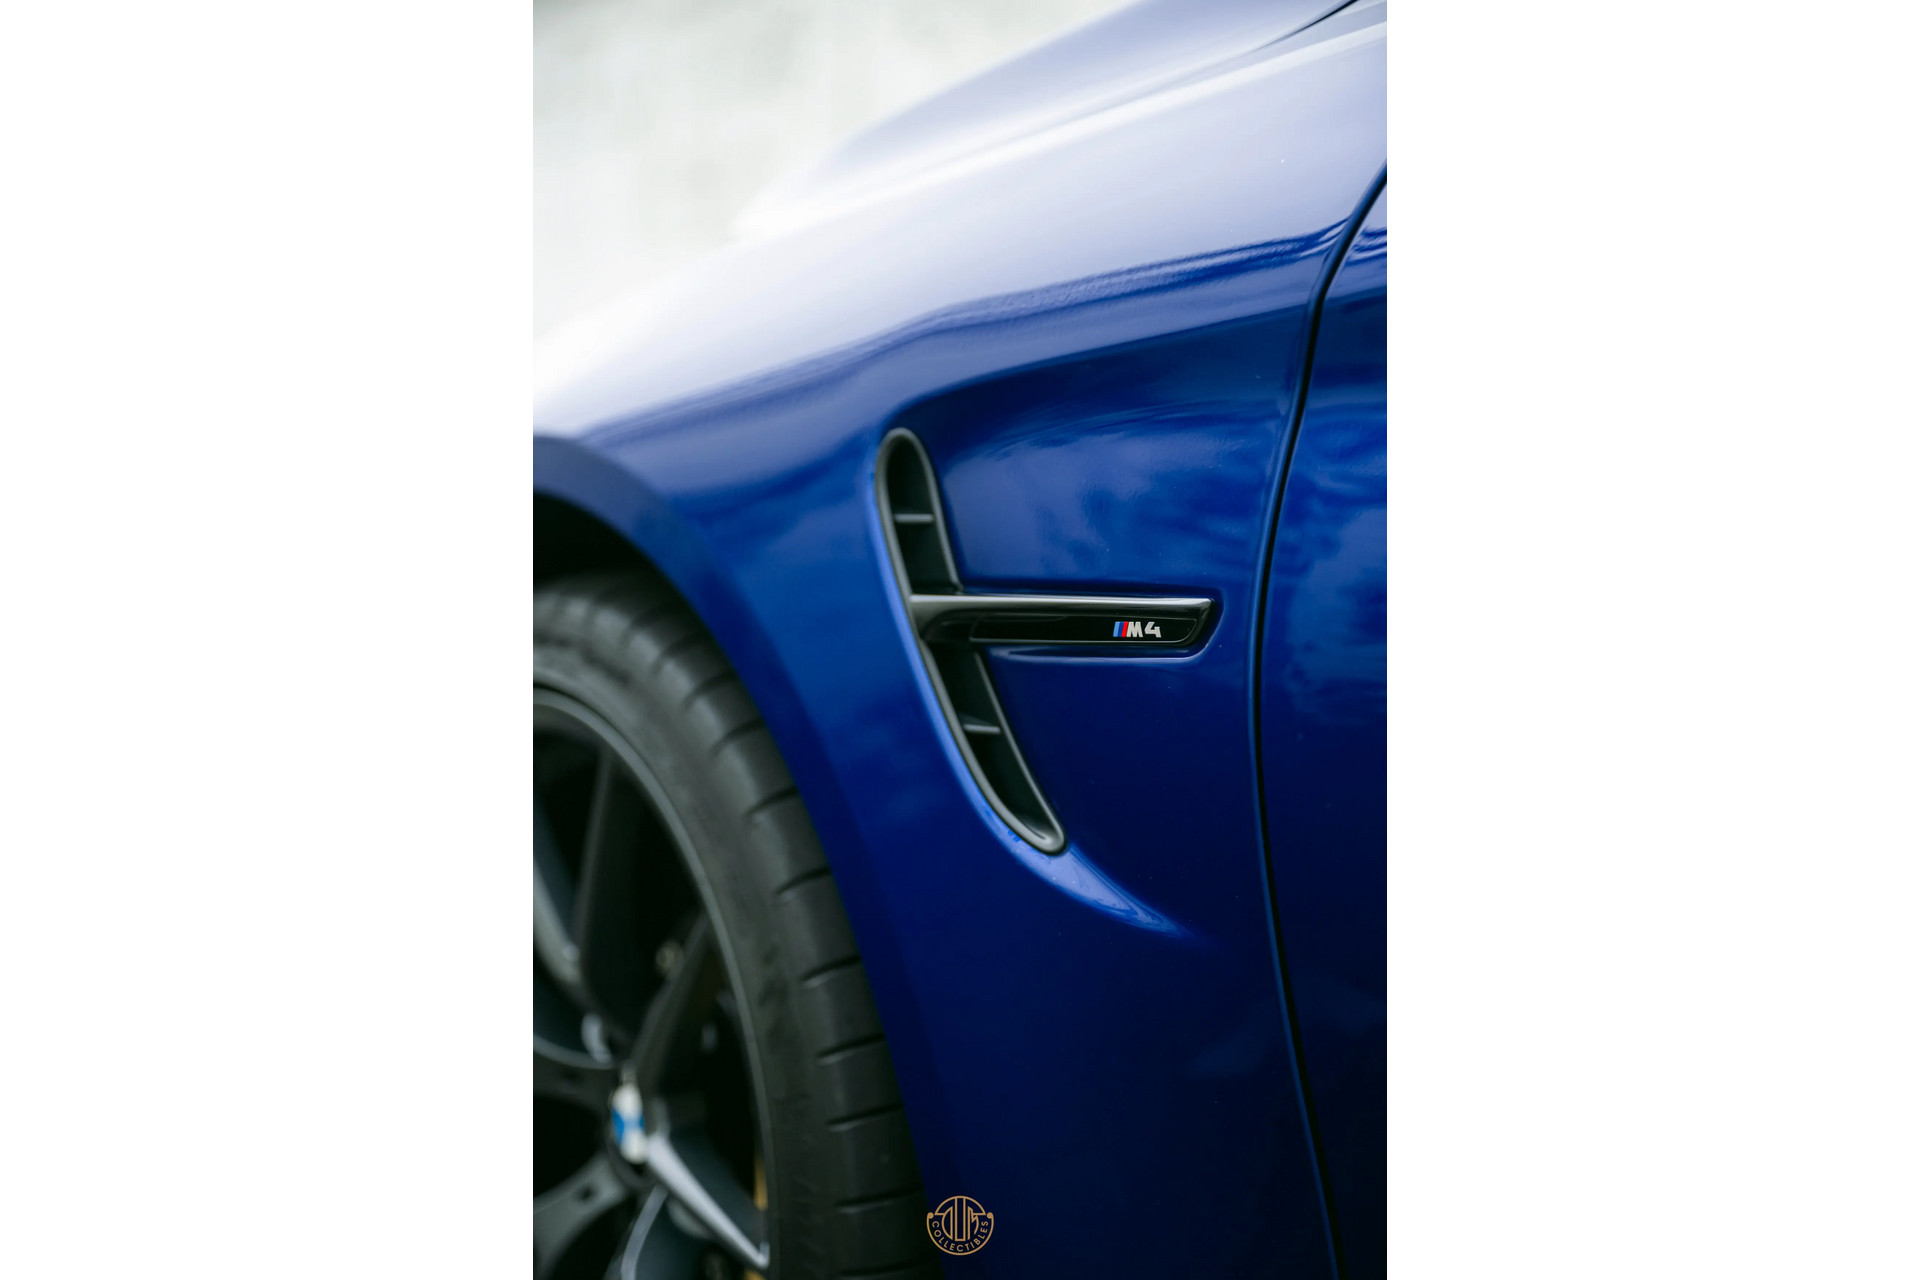 BMW 4 Serie Coupé M4 CS 2017 San marino blau metallic 35